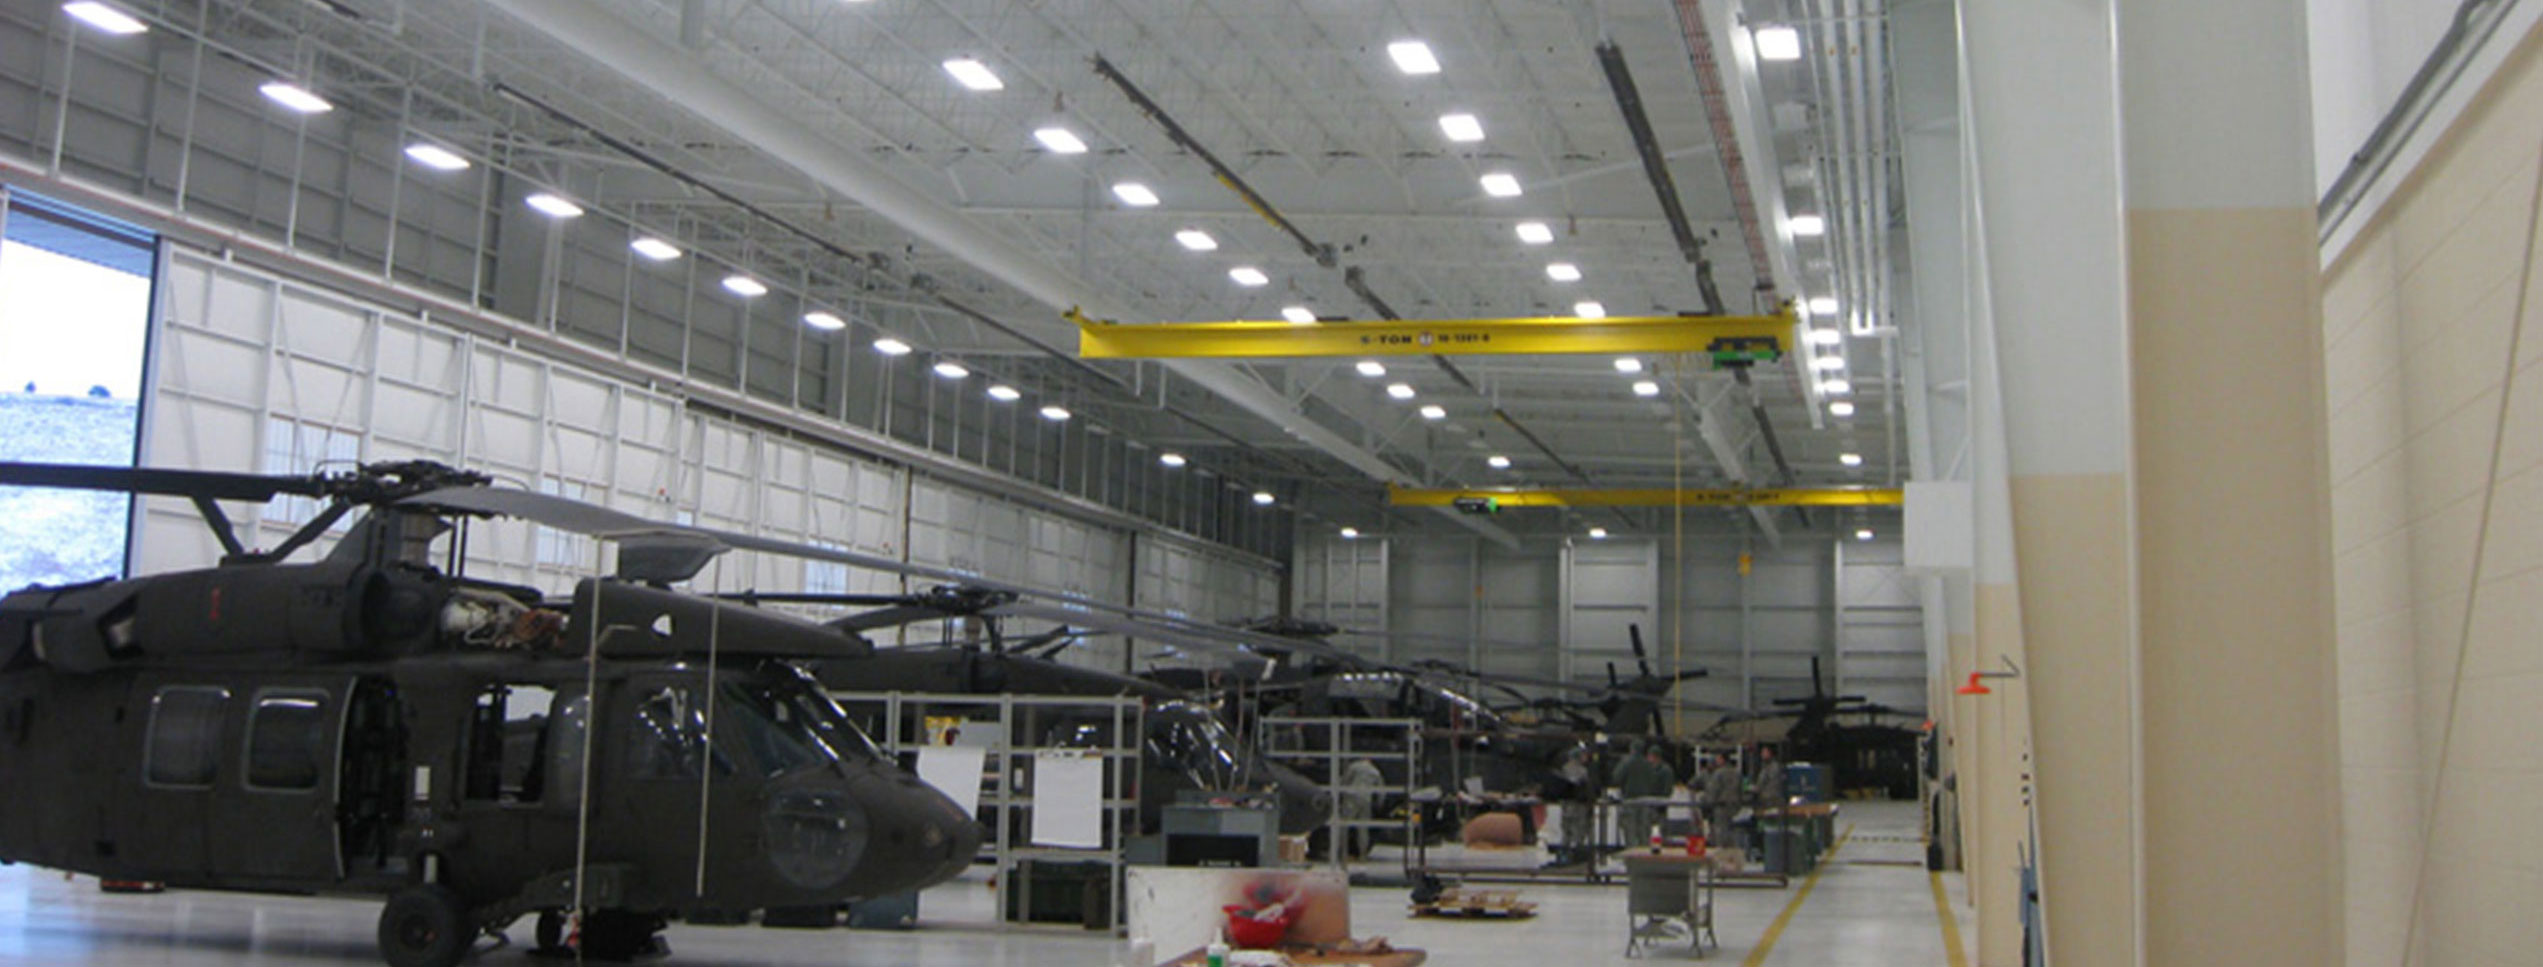 Fort Riley Aviation Brigade Facility